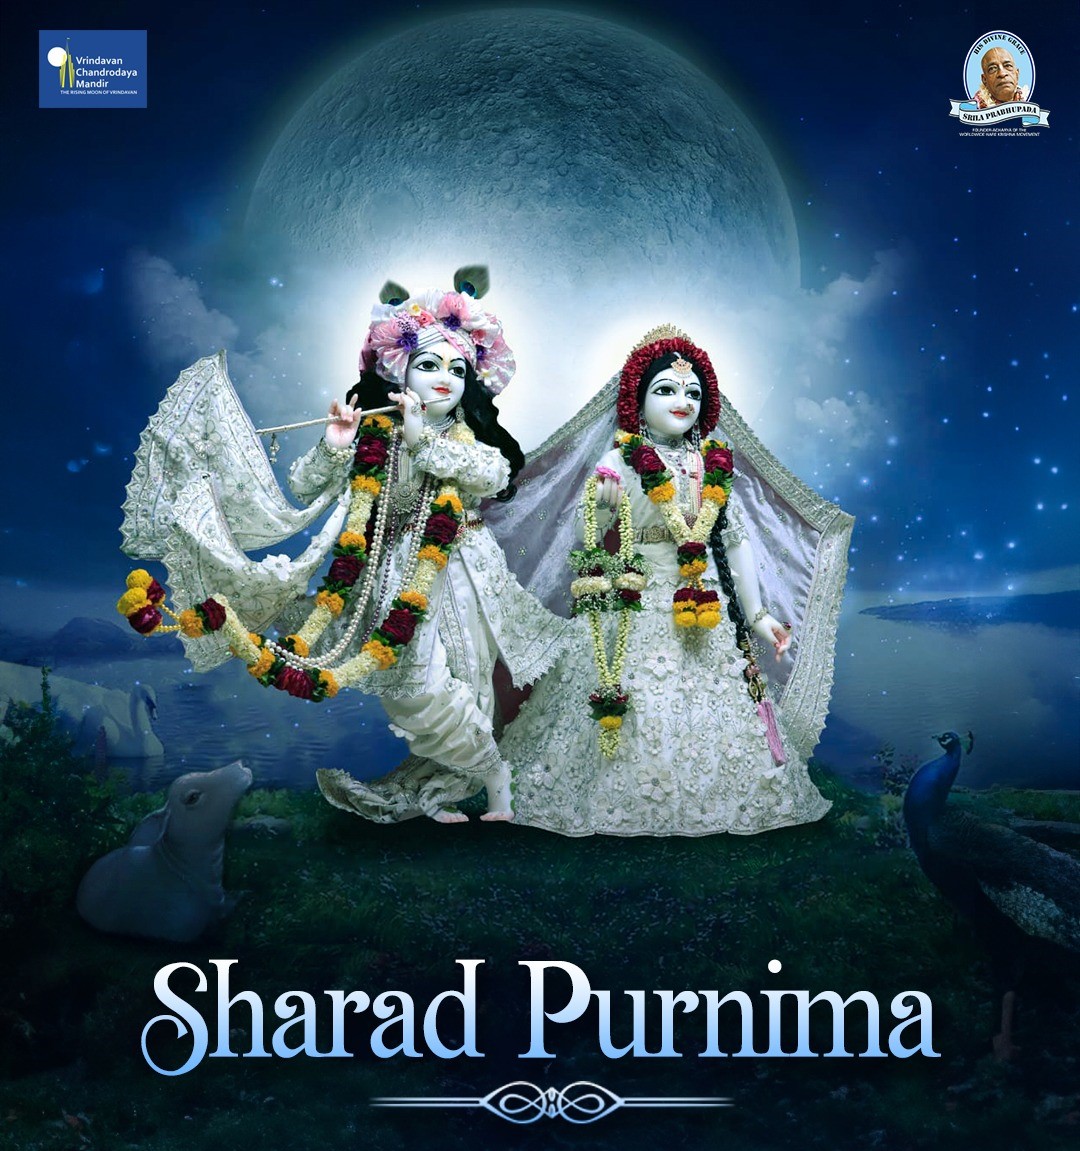 Sharad Purnima - The divine full moon night of Lord Krishna